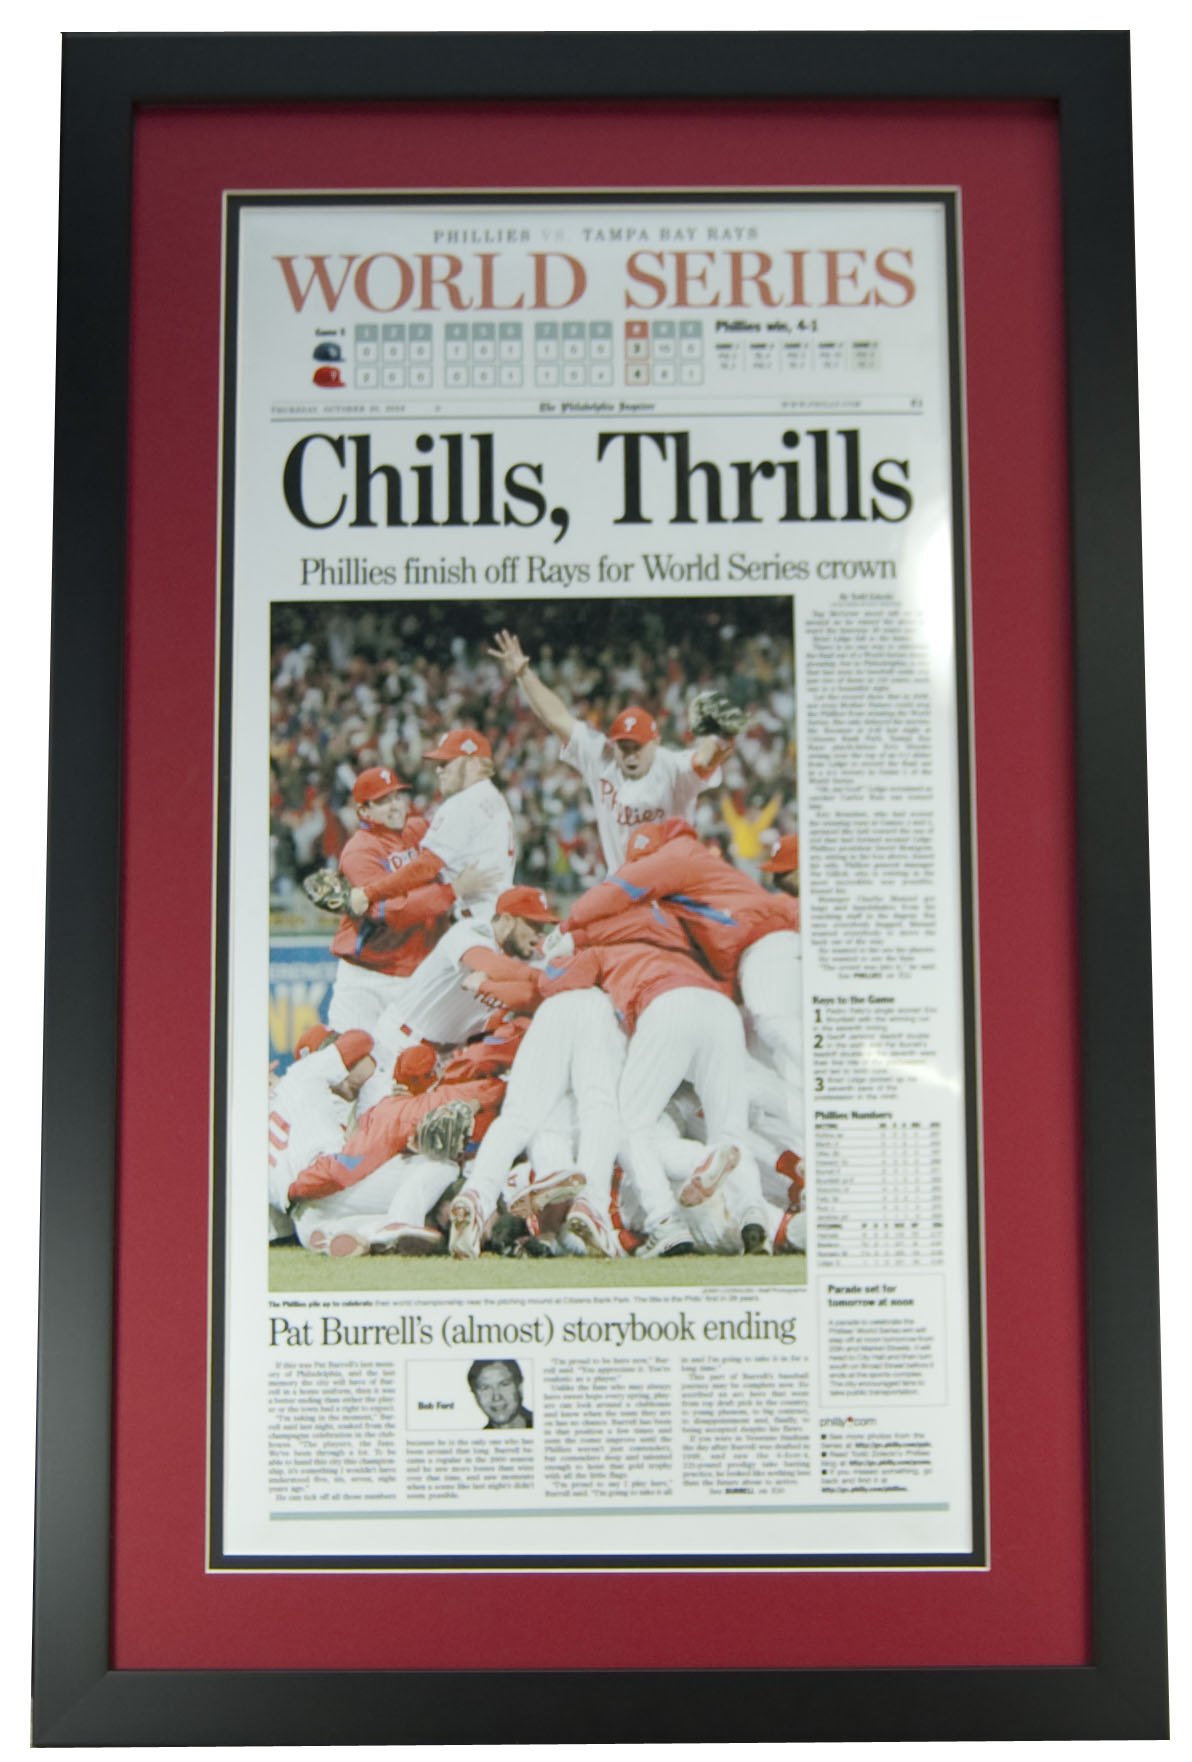 Philadelphia Phillies 2008 World Series Newspaper Frame